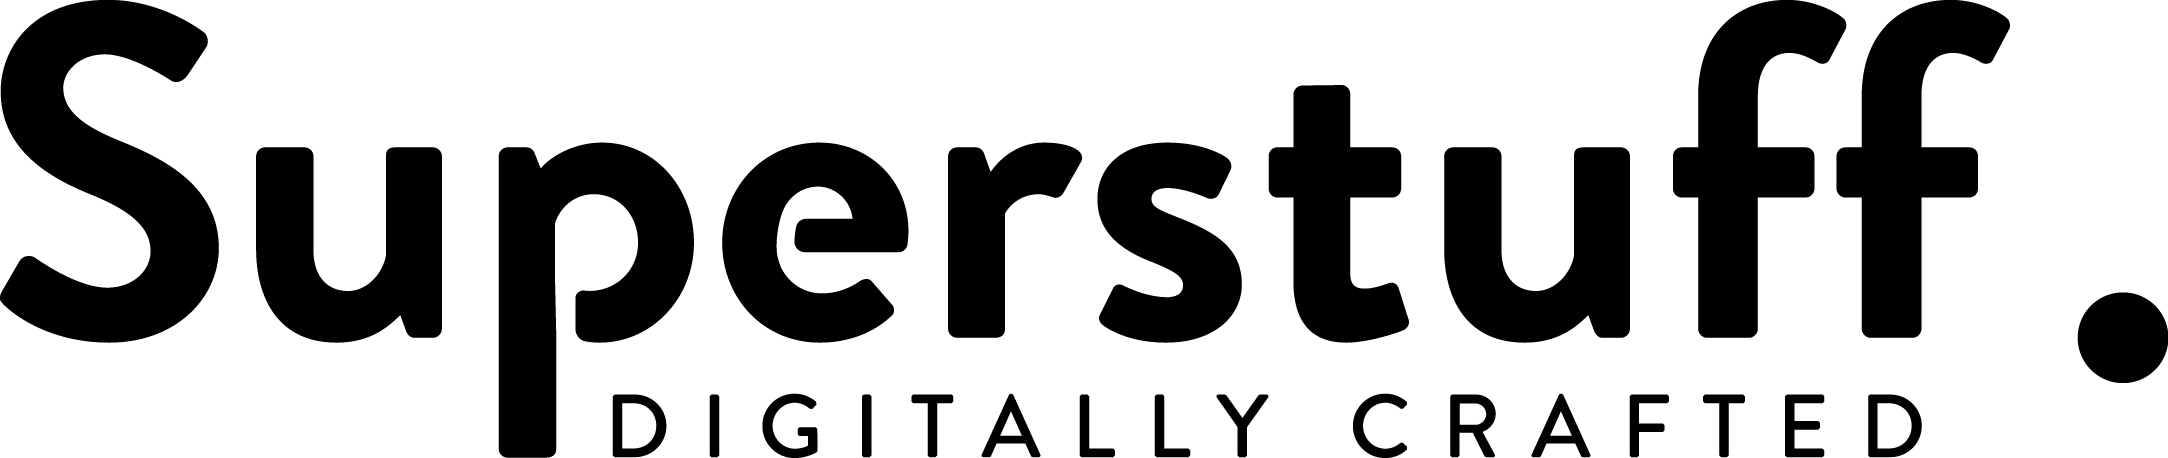 logo-Superstuff